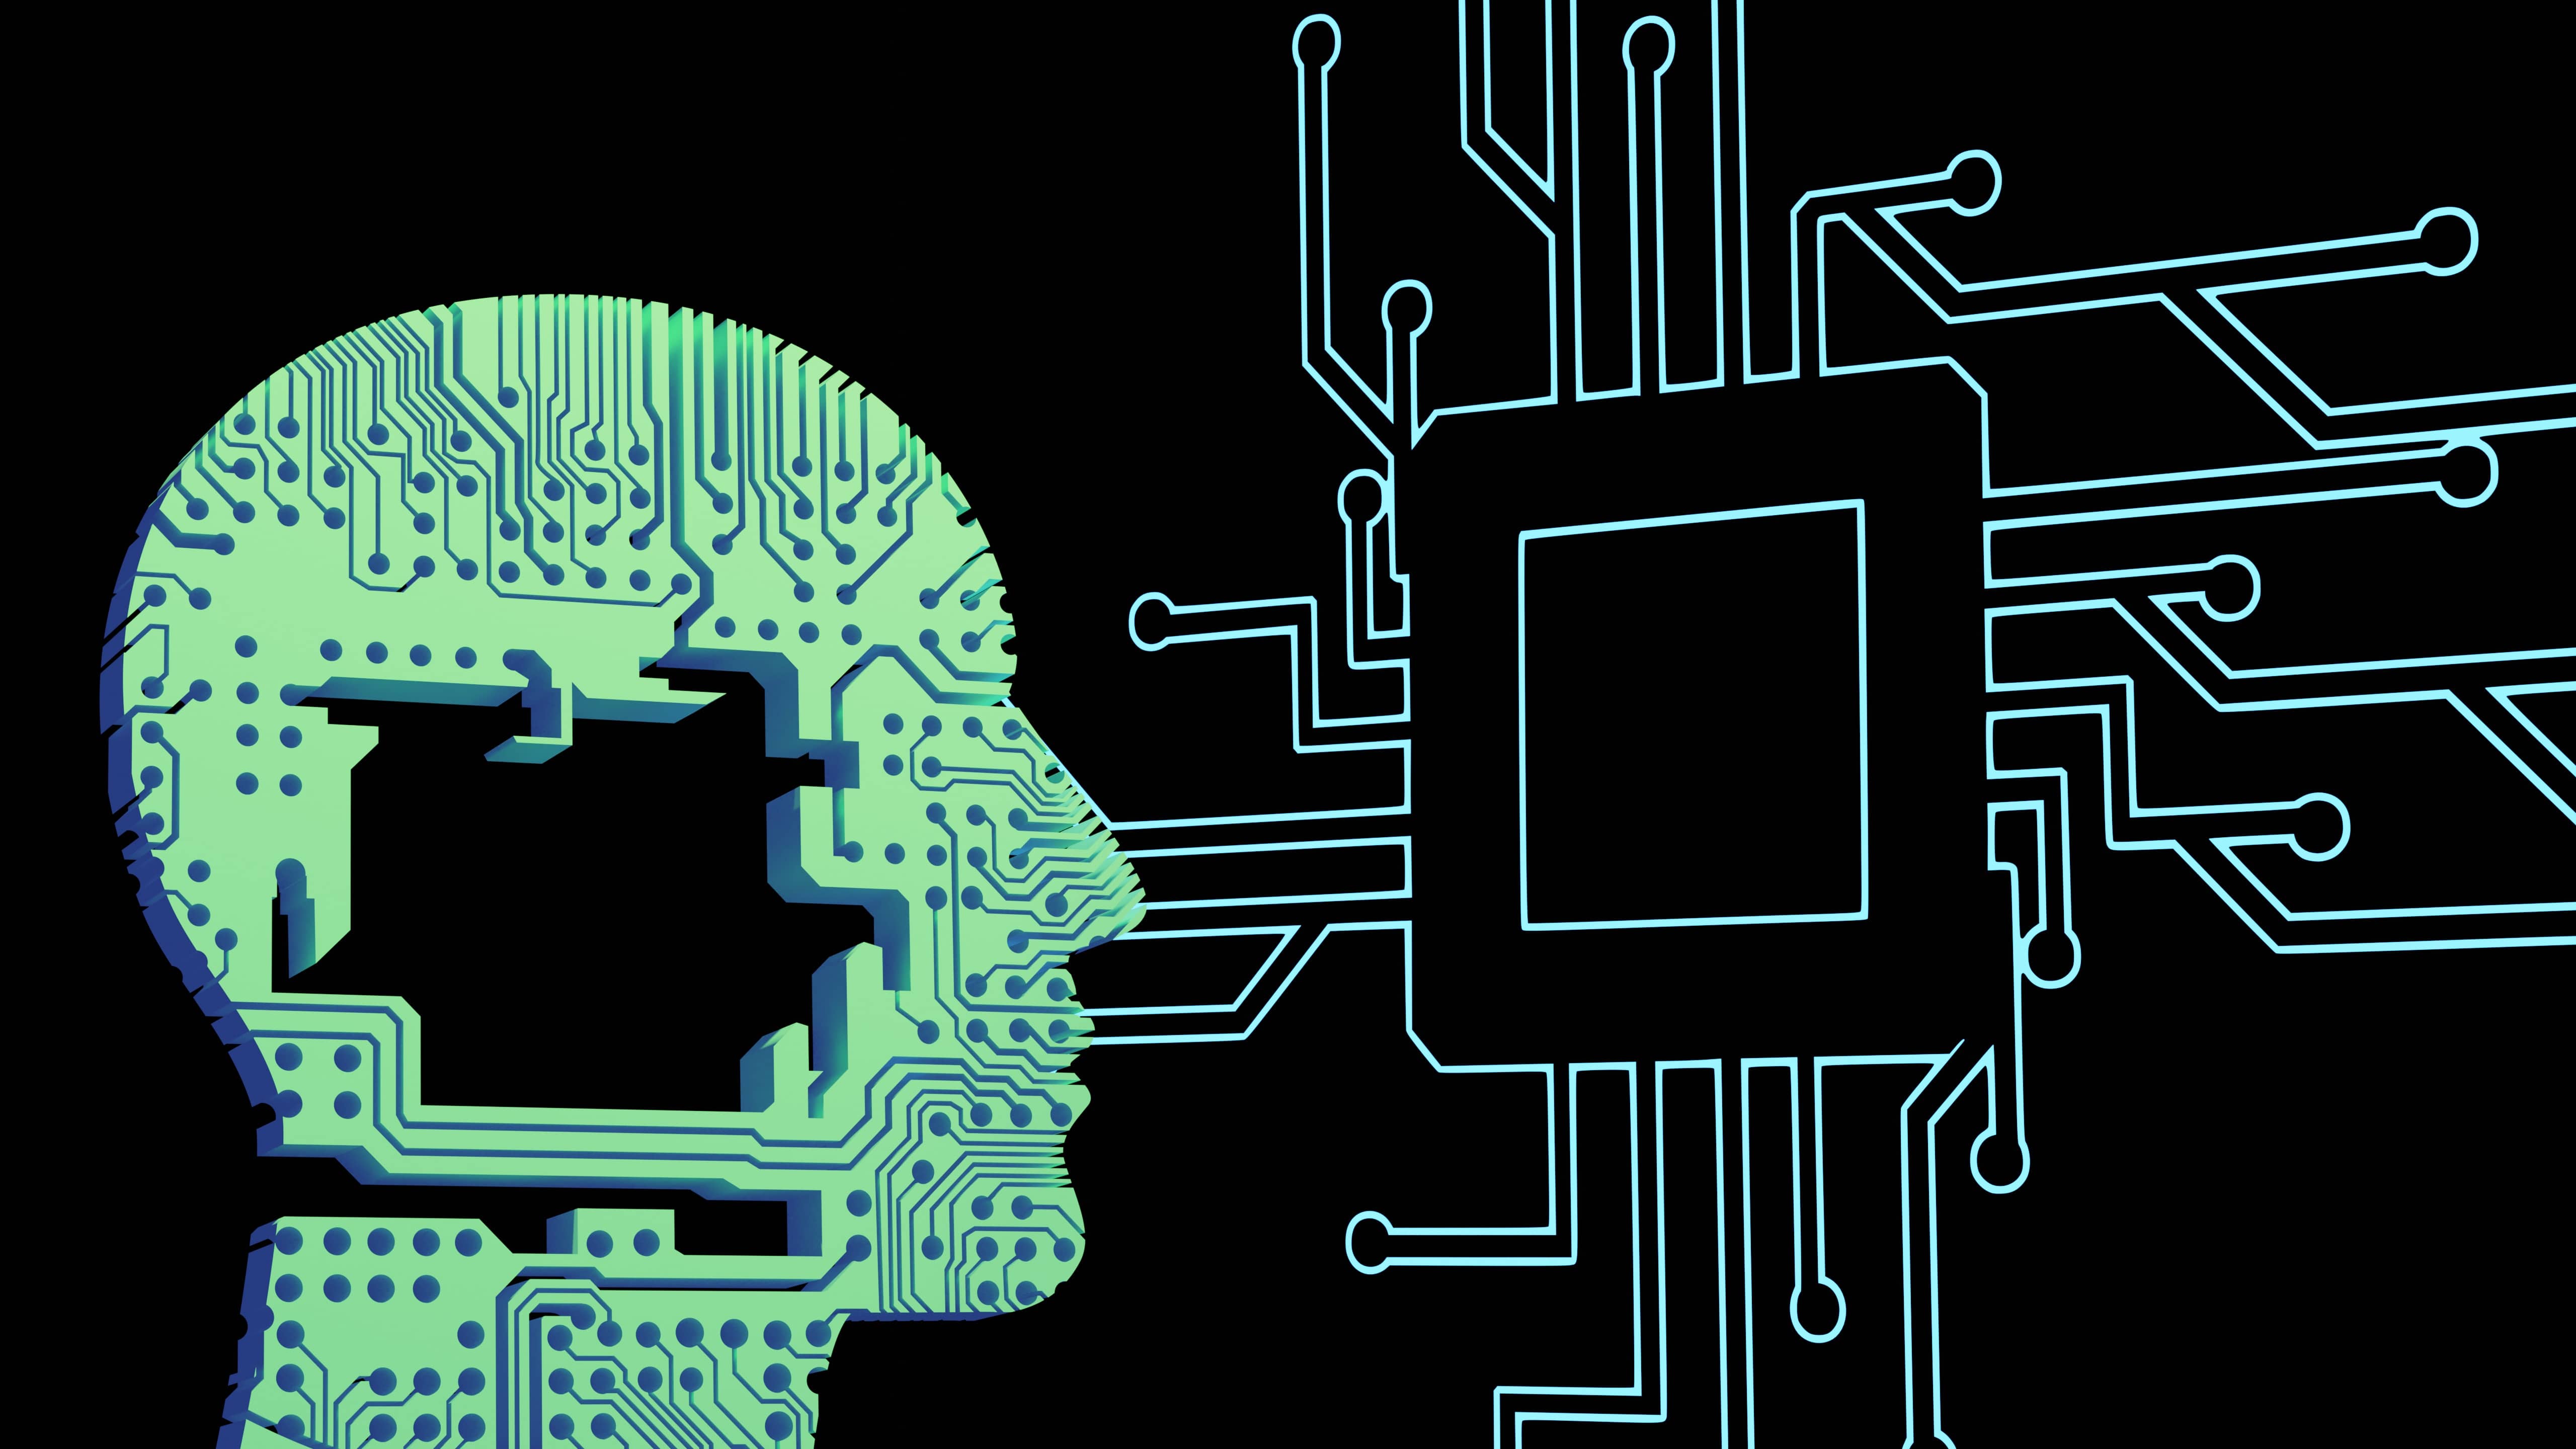 Digital art representing AI; showing computer circuitry while resembling the human brain. recreate